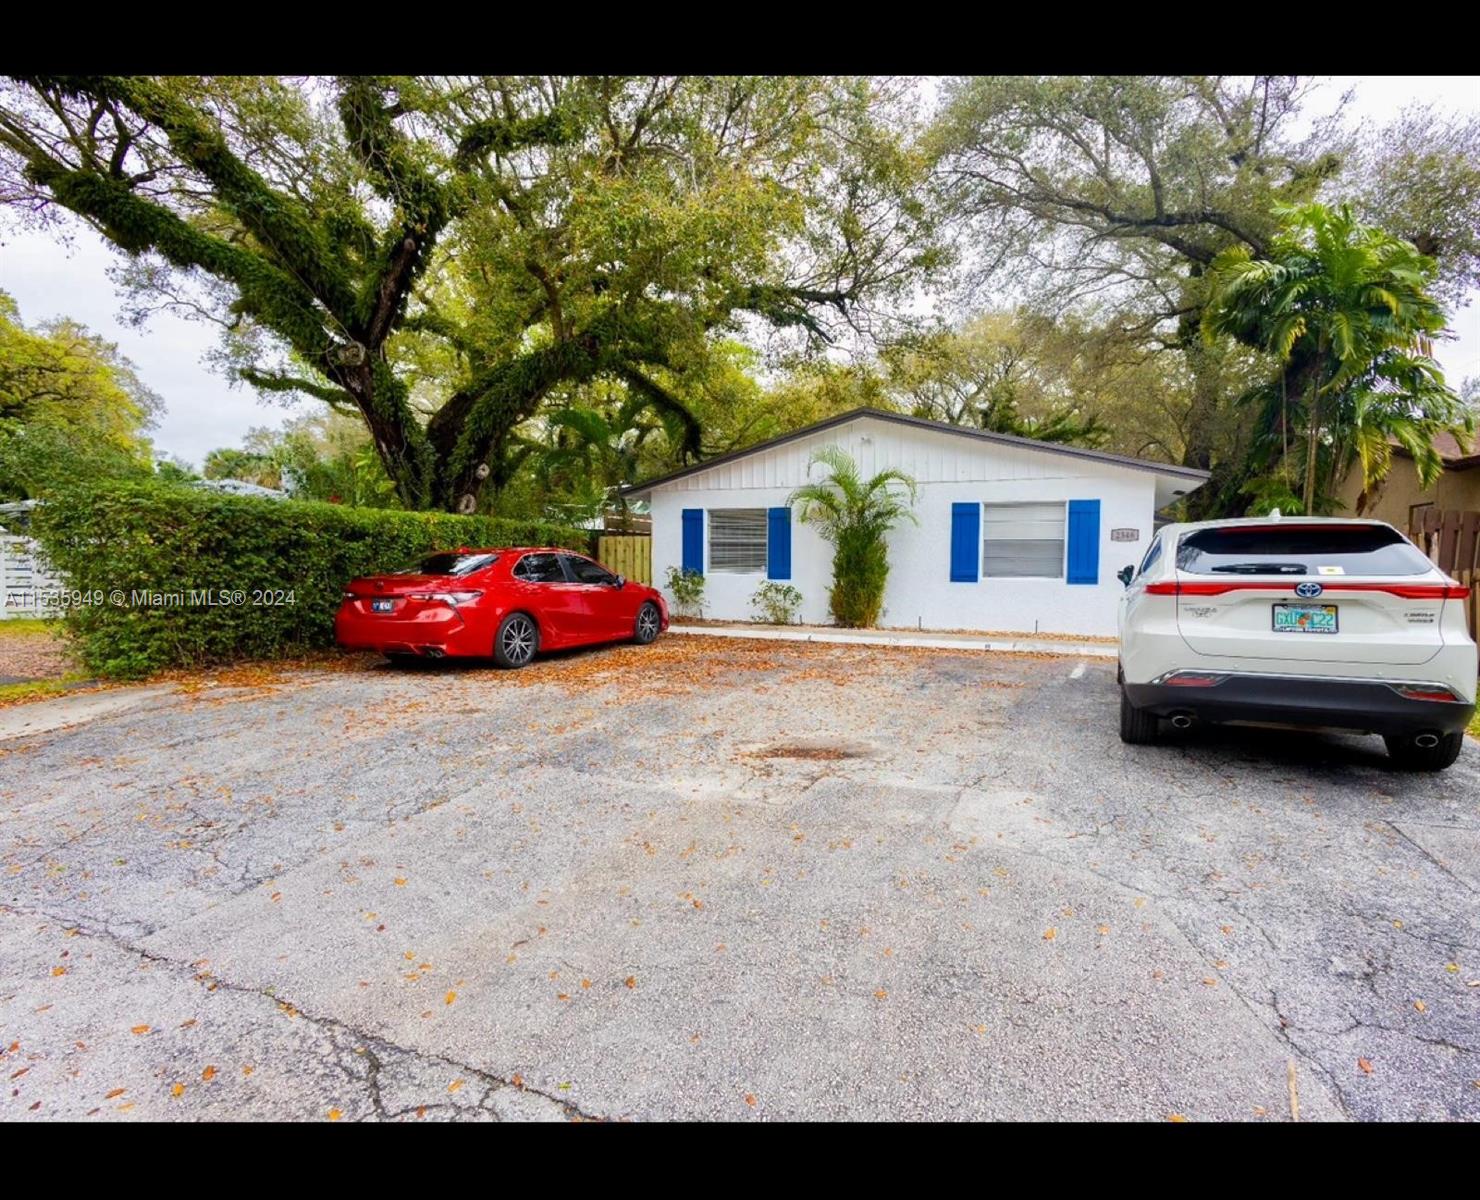 Rental Property at 2346 17 Ave Ave, Fort Lauderdale, Broward County, Florida -  - $879,000 MO.